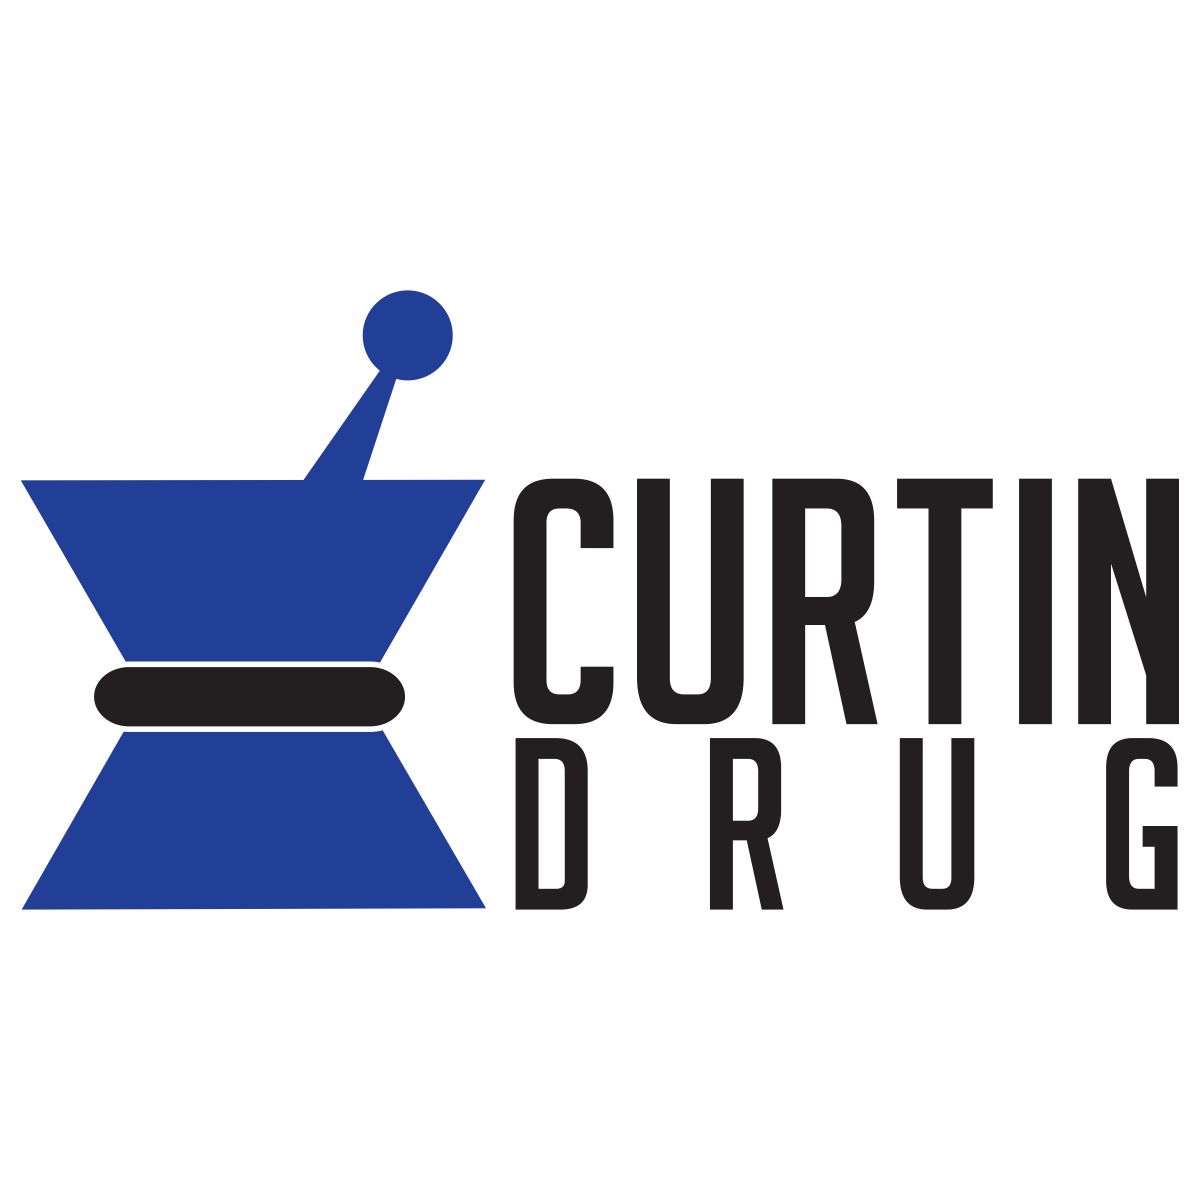 Curtin Drug